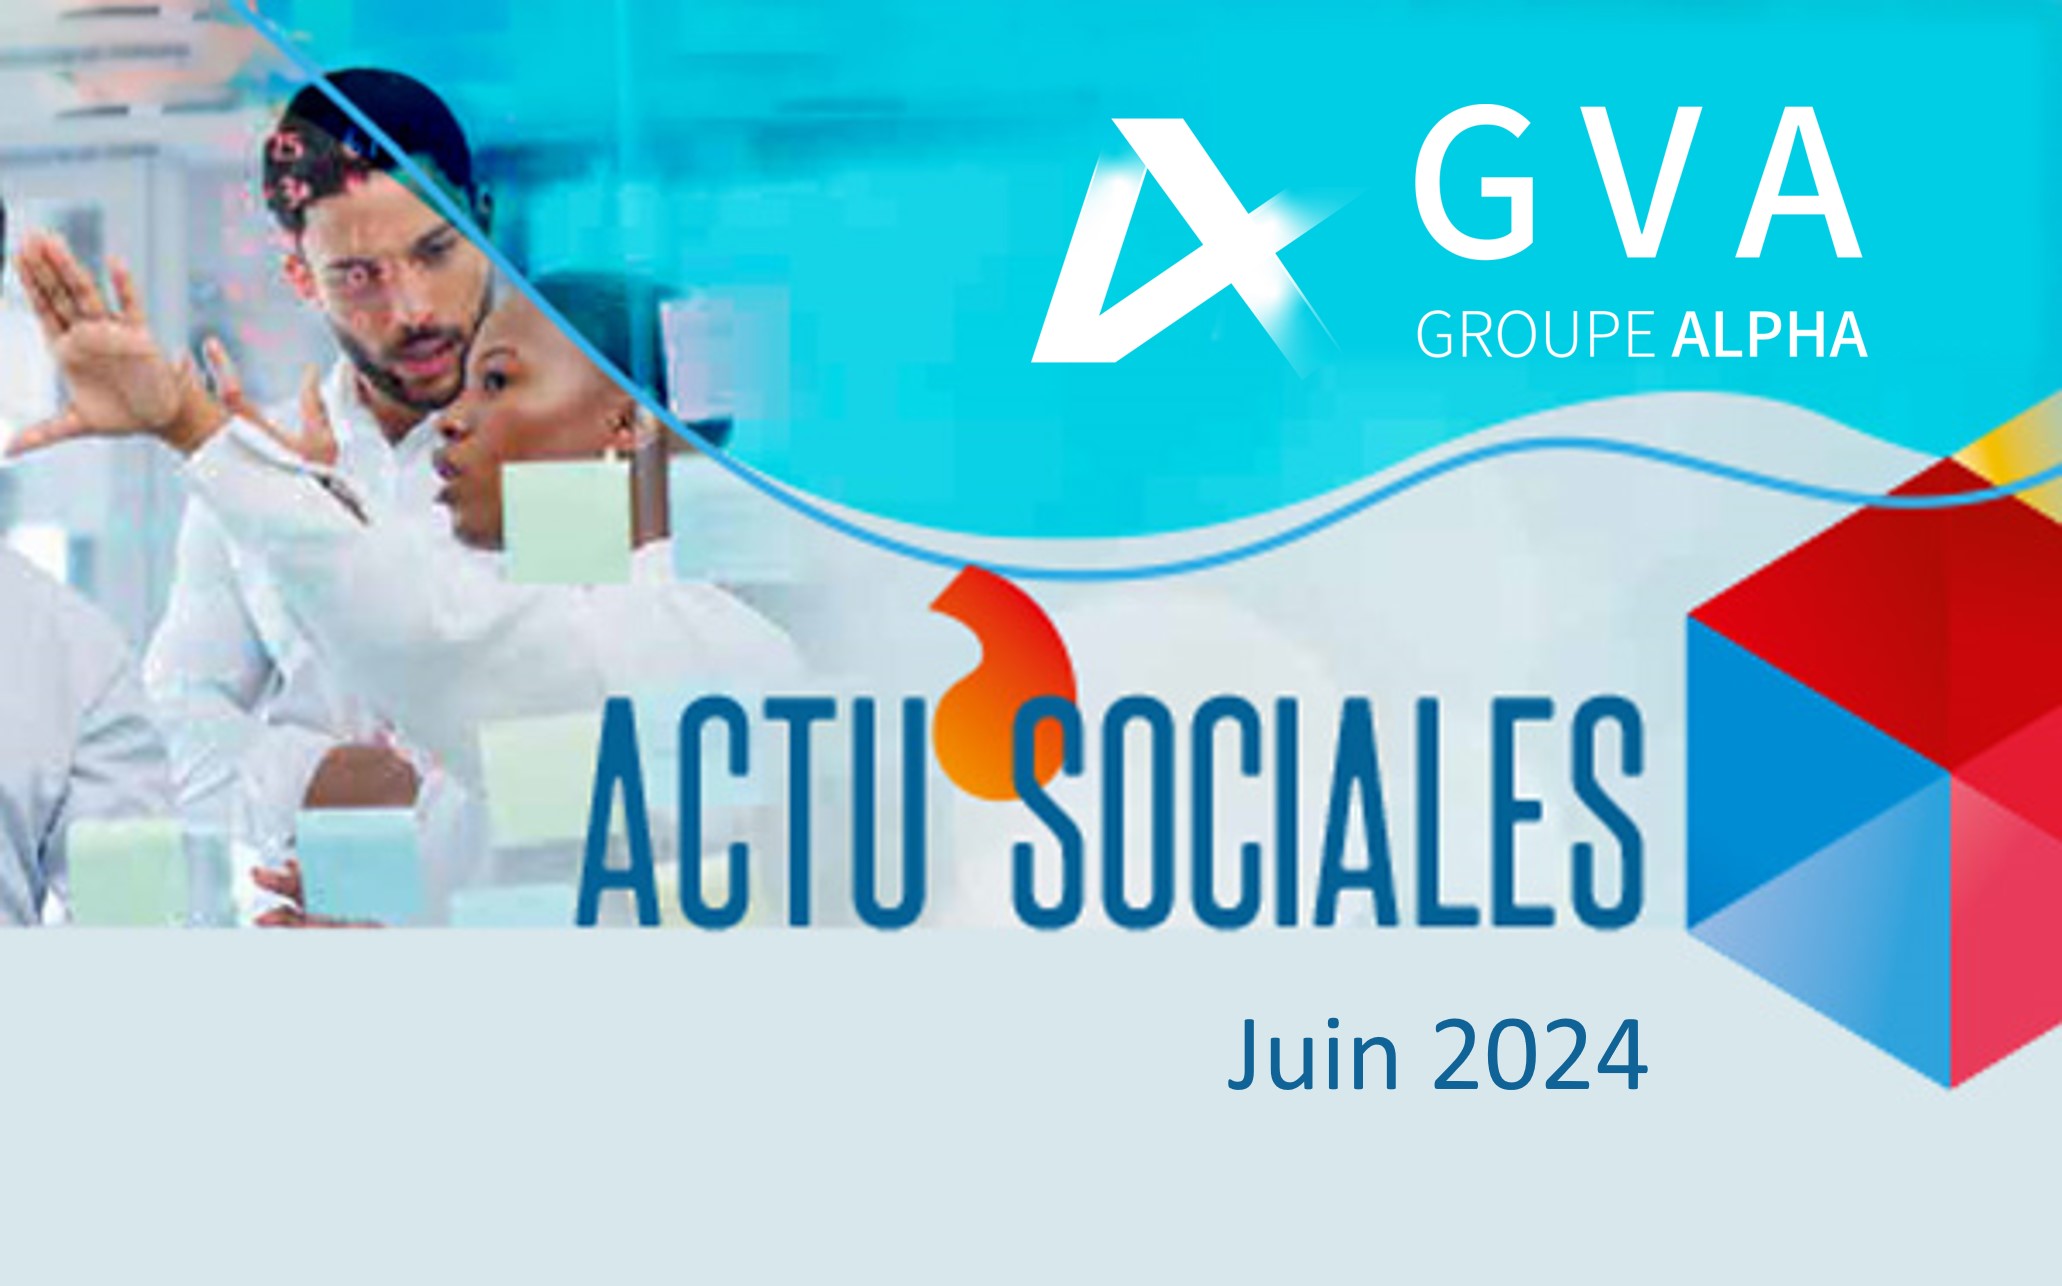 actus sociales GVA 600x374 06 24 1